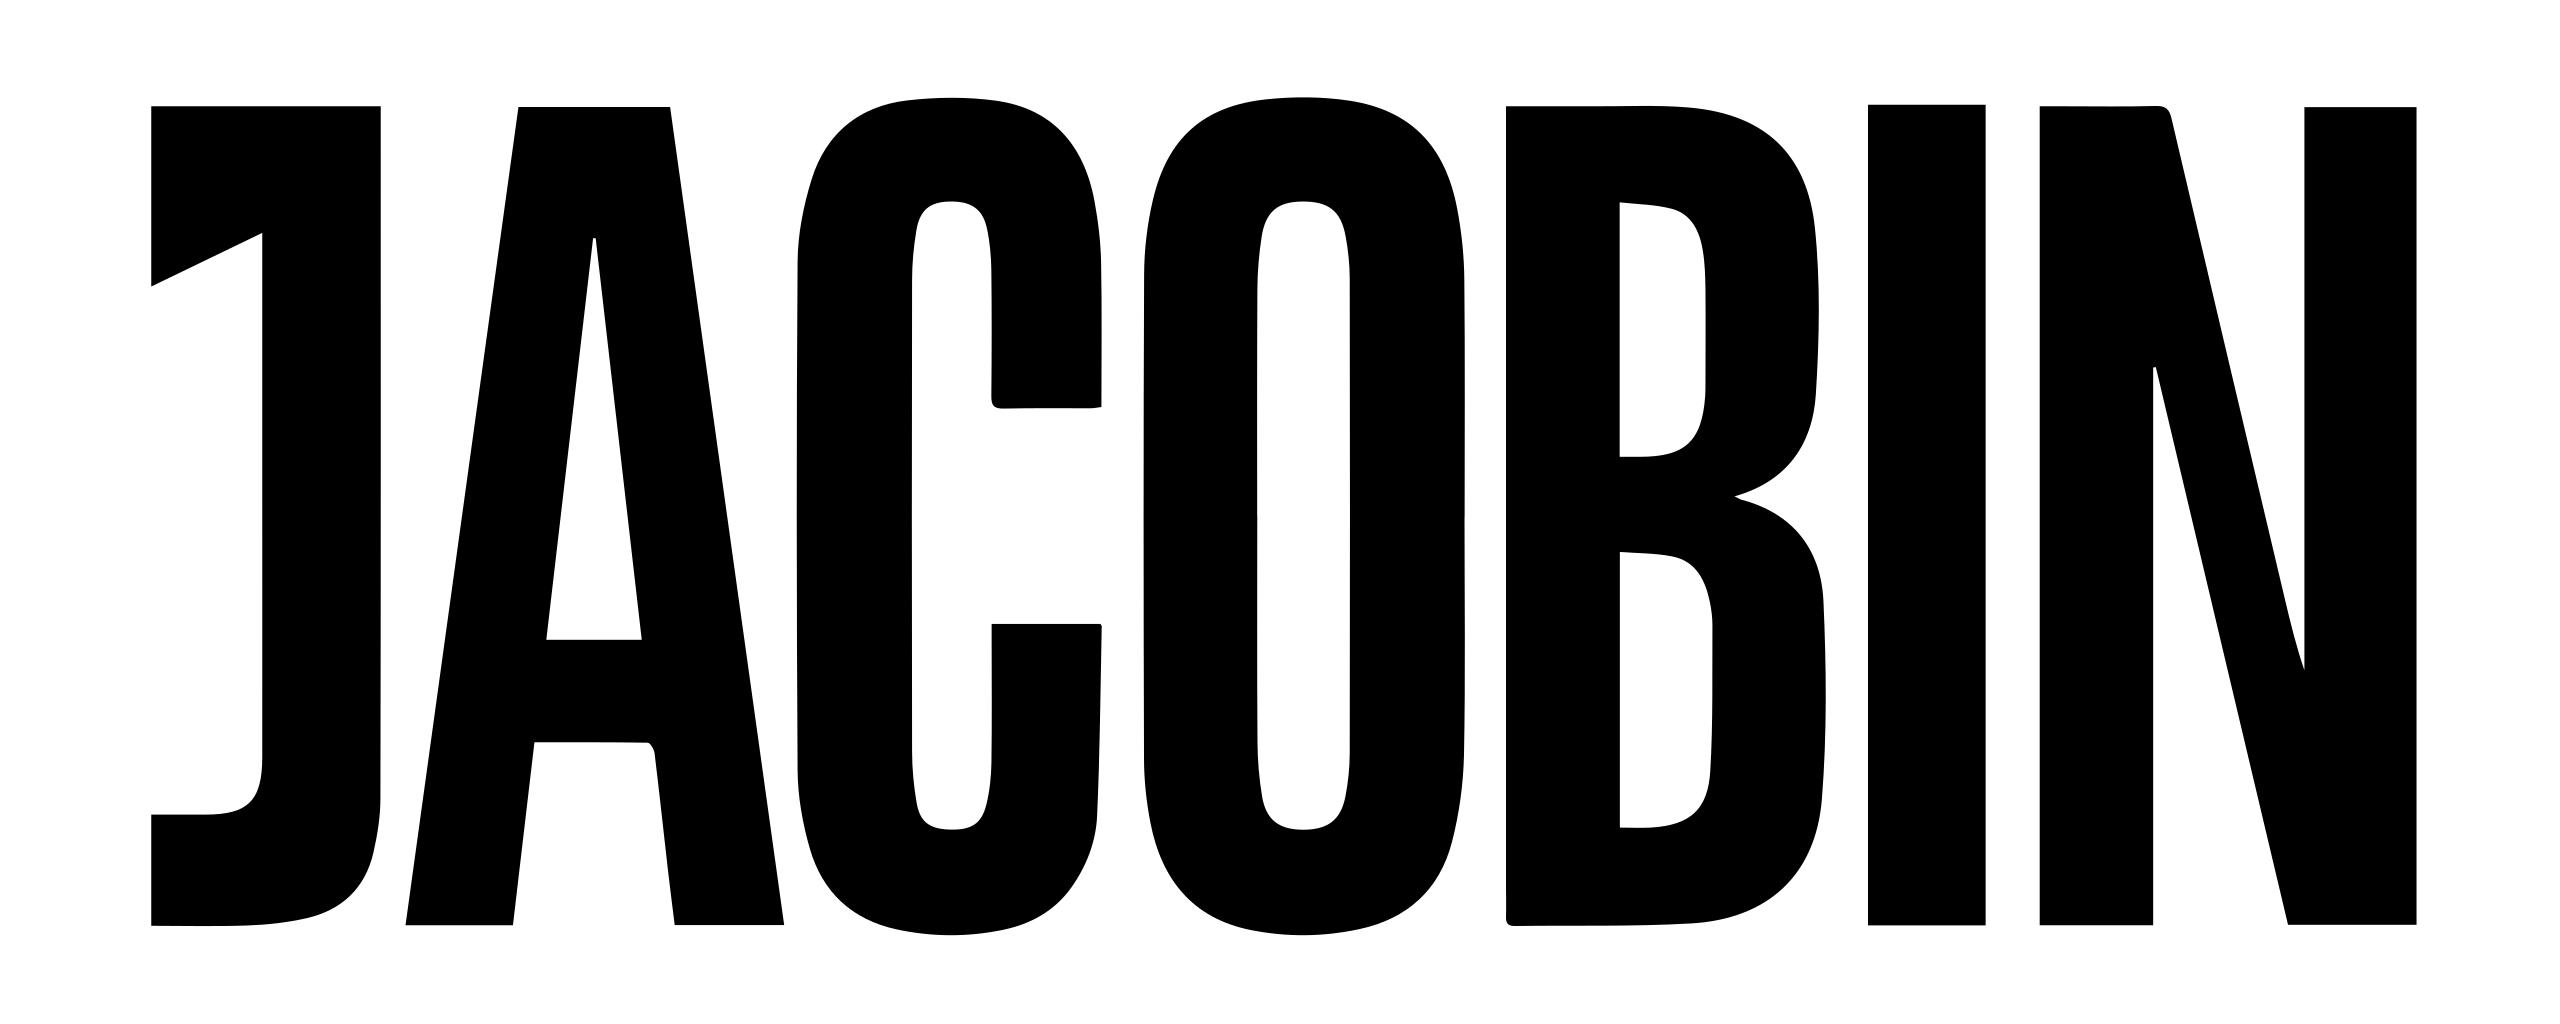 File:Jacobin logo.png